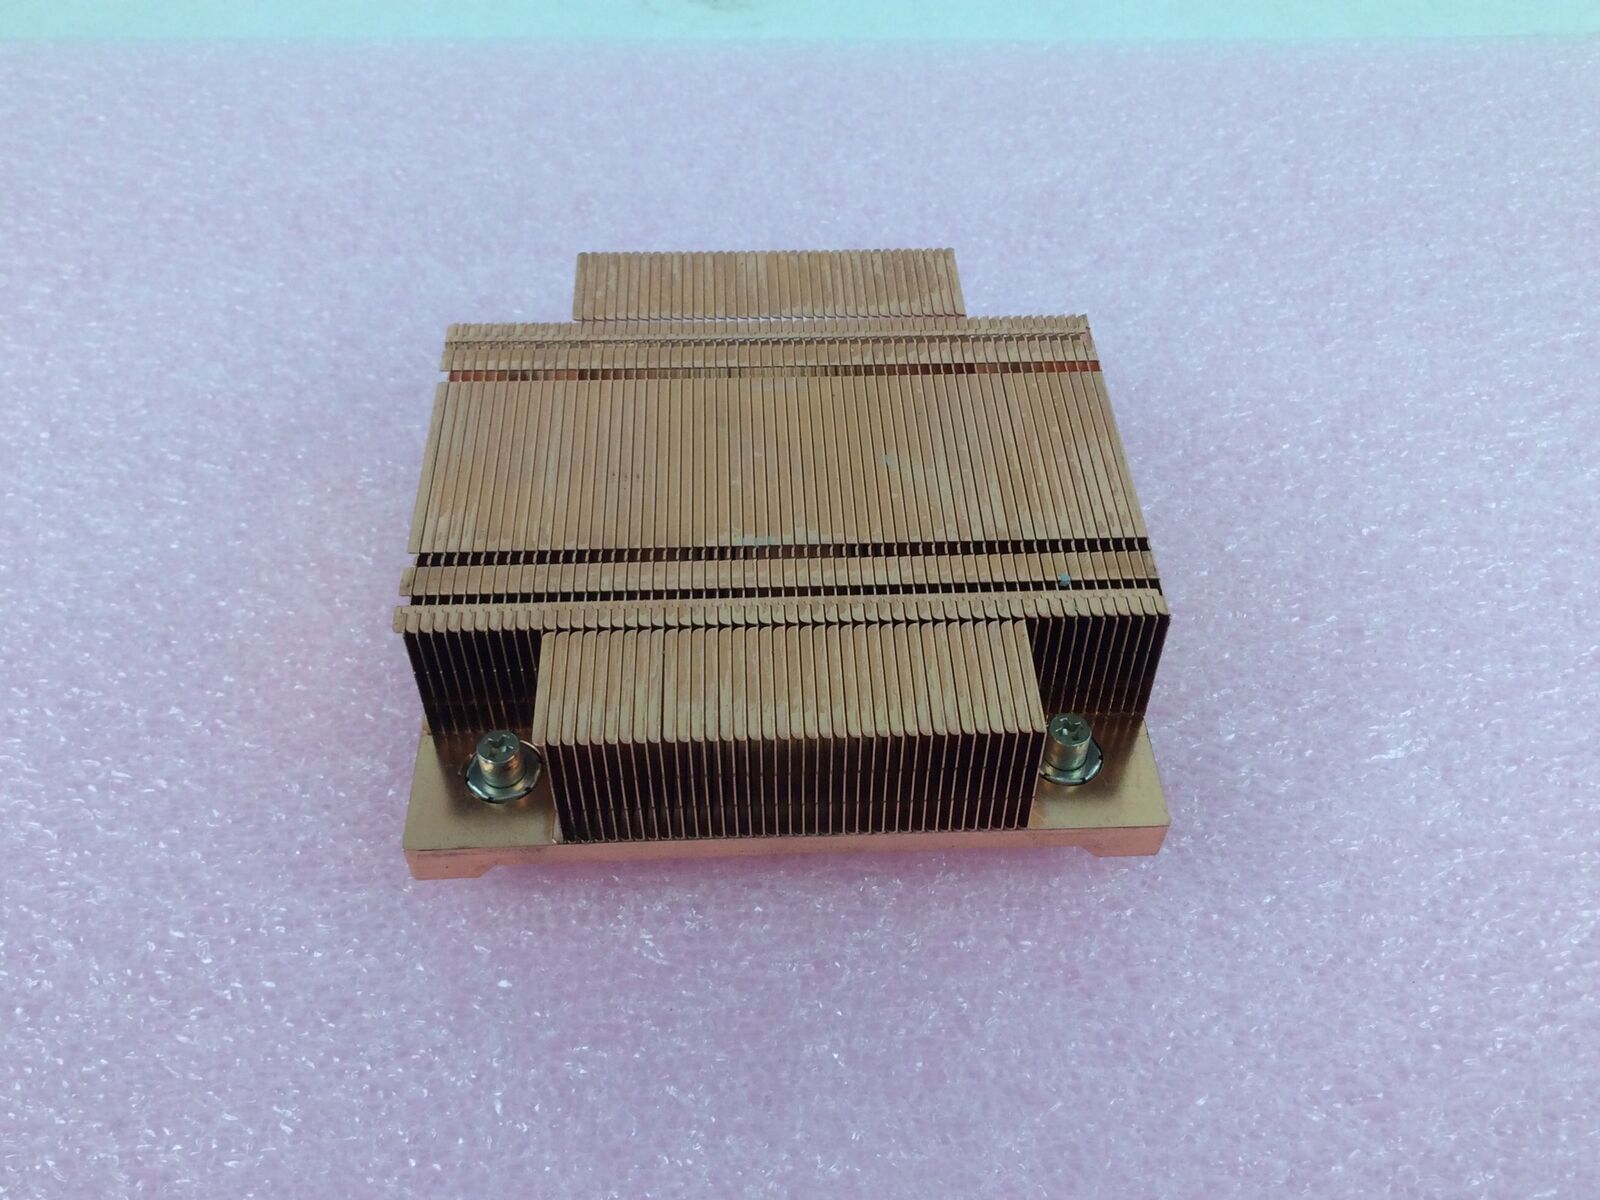 69169-001 Intel Heatsink C69169-001 1U Passive Cooler